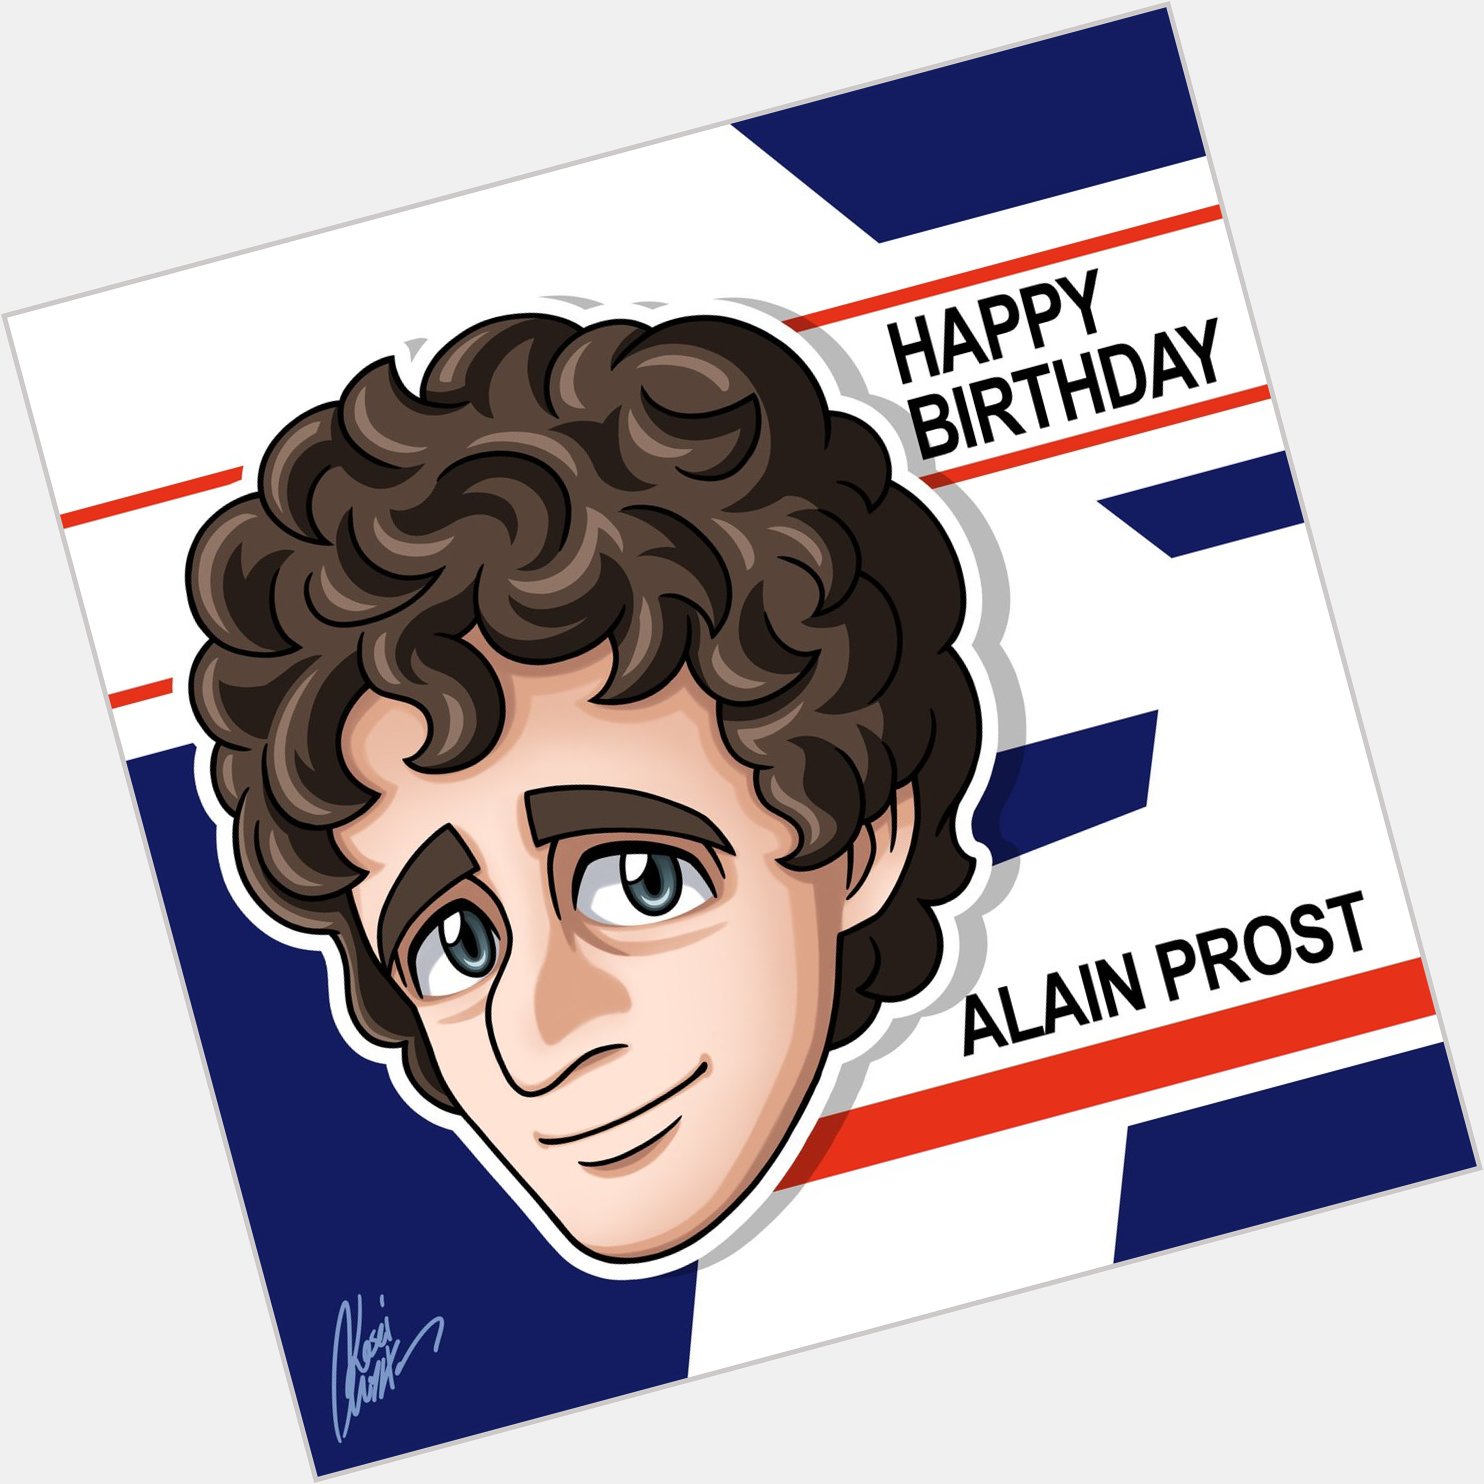              Happy Birthday  F1 Legend Alain Prost  